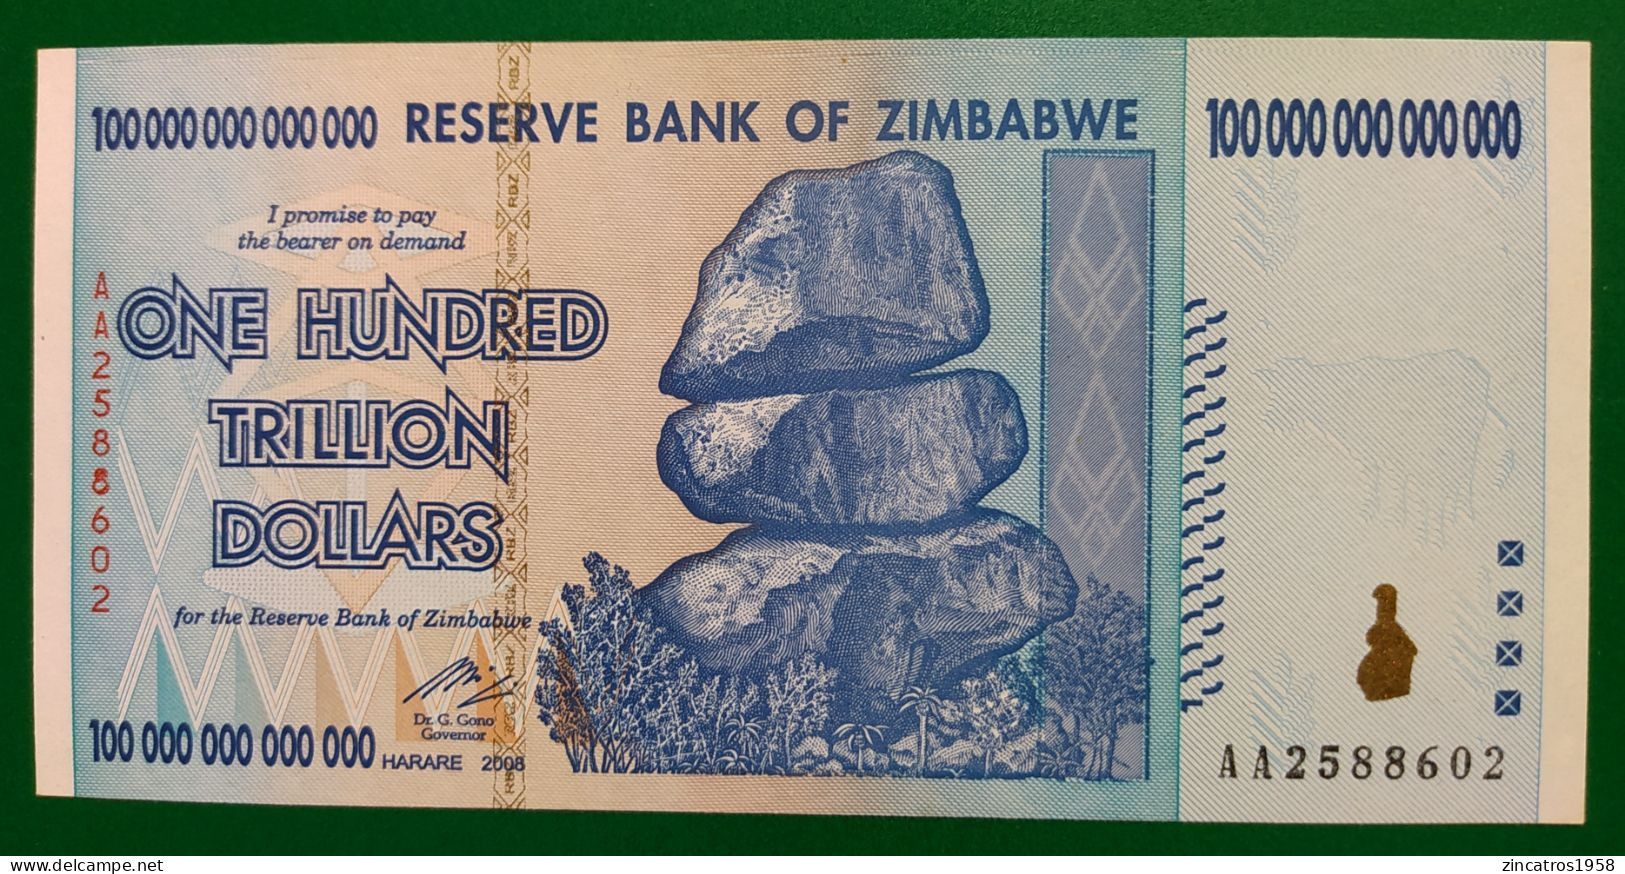 Zimbabwe / 100 Trillion Dollars 2008 P. 91 / 100 % UNC Original AA Serie / Top Price ++ Highest Denomination World +++++ - Simbabwe